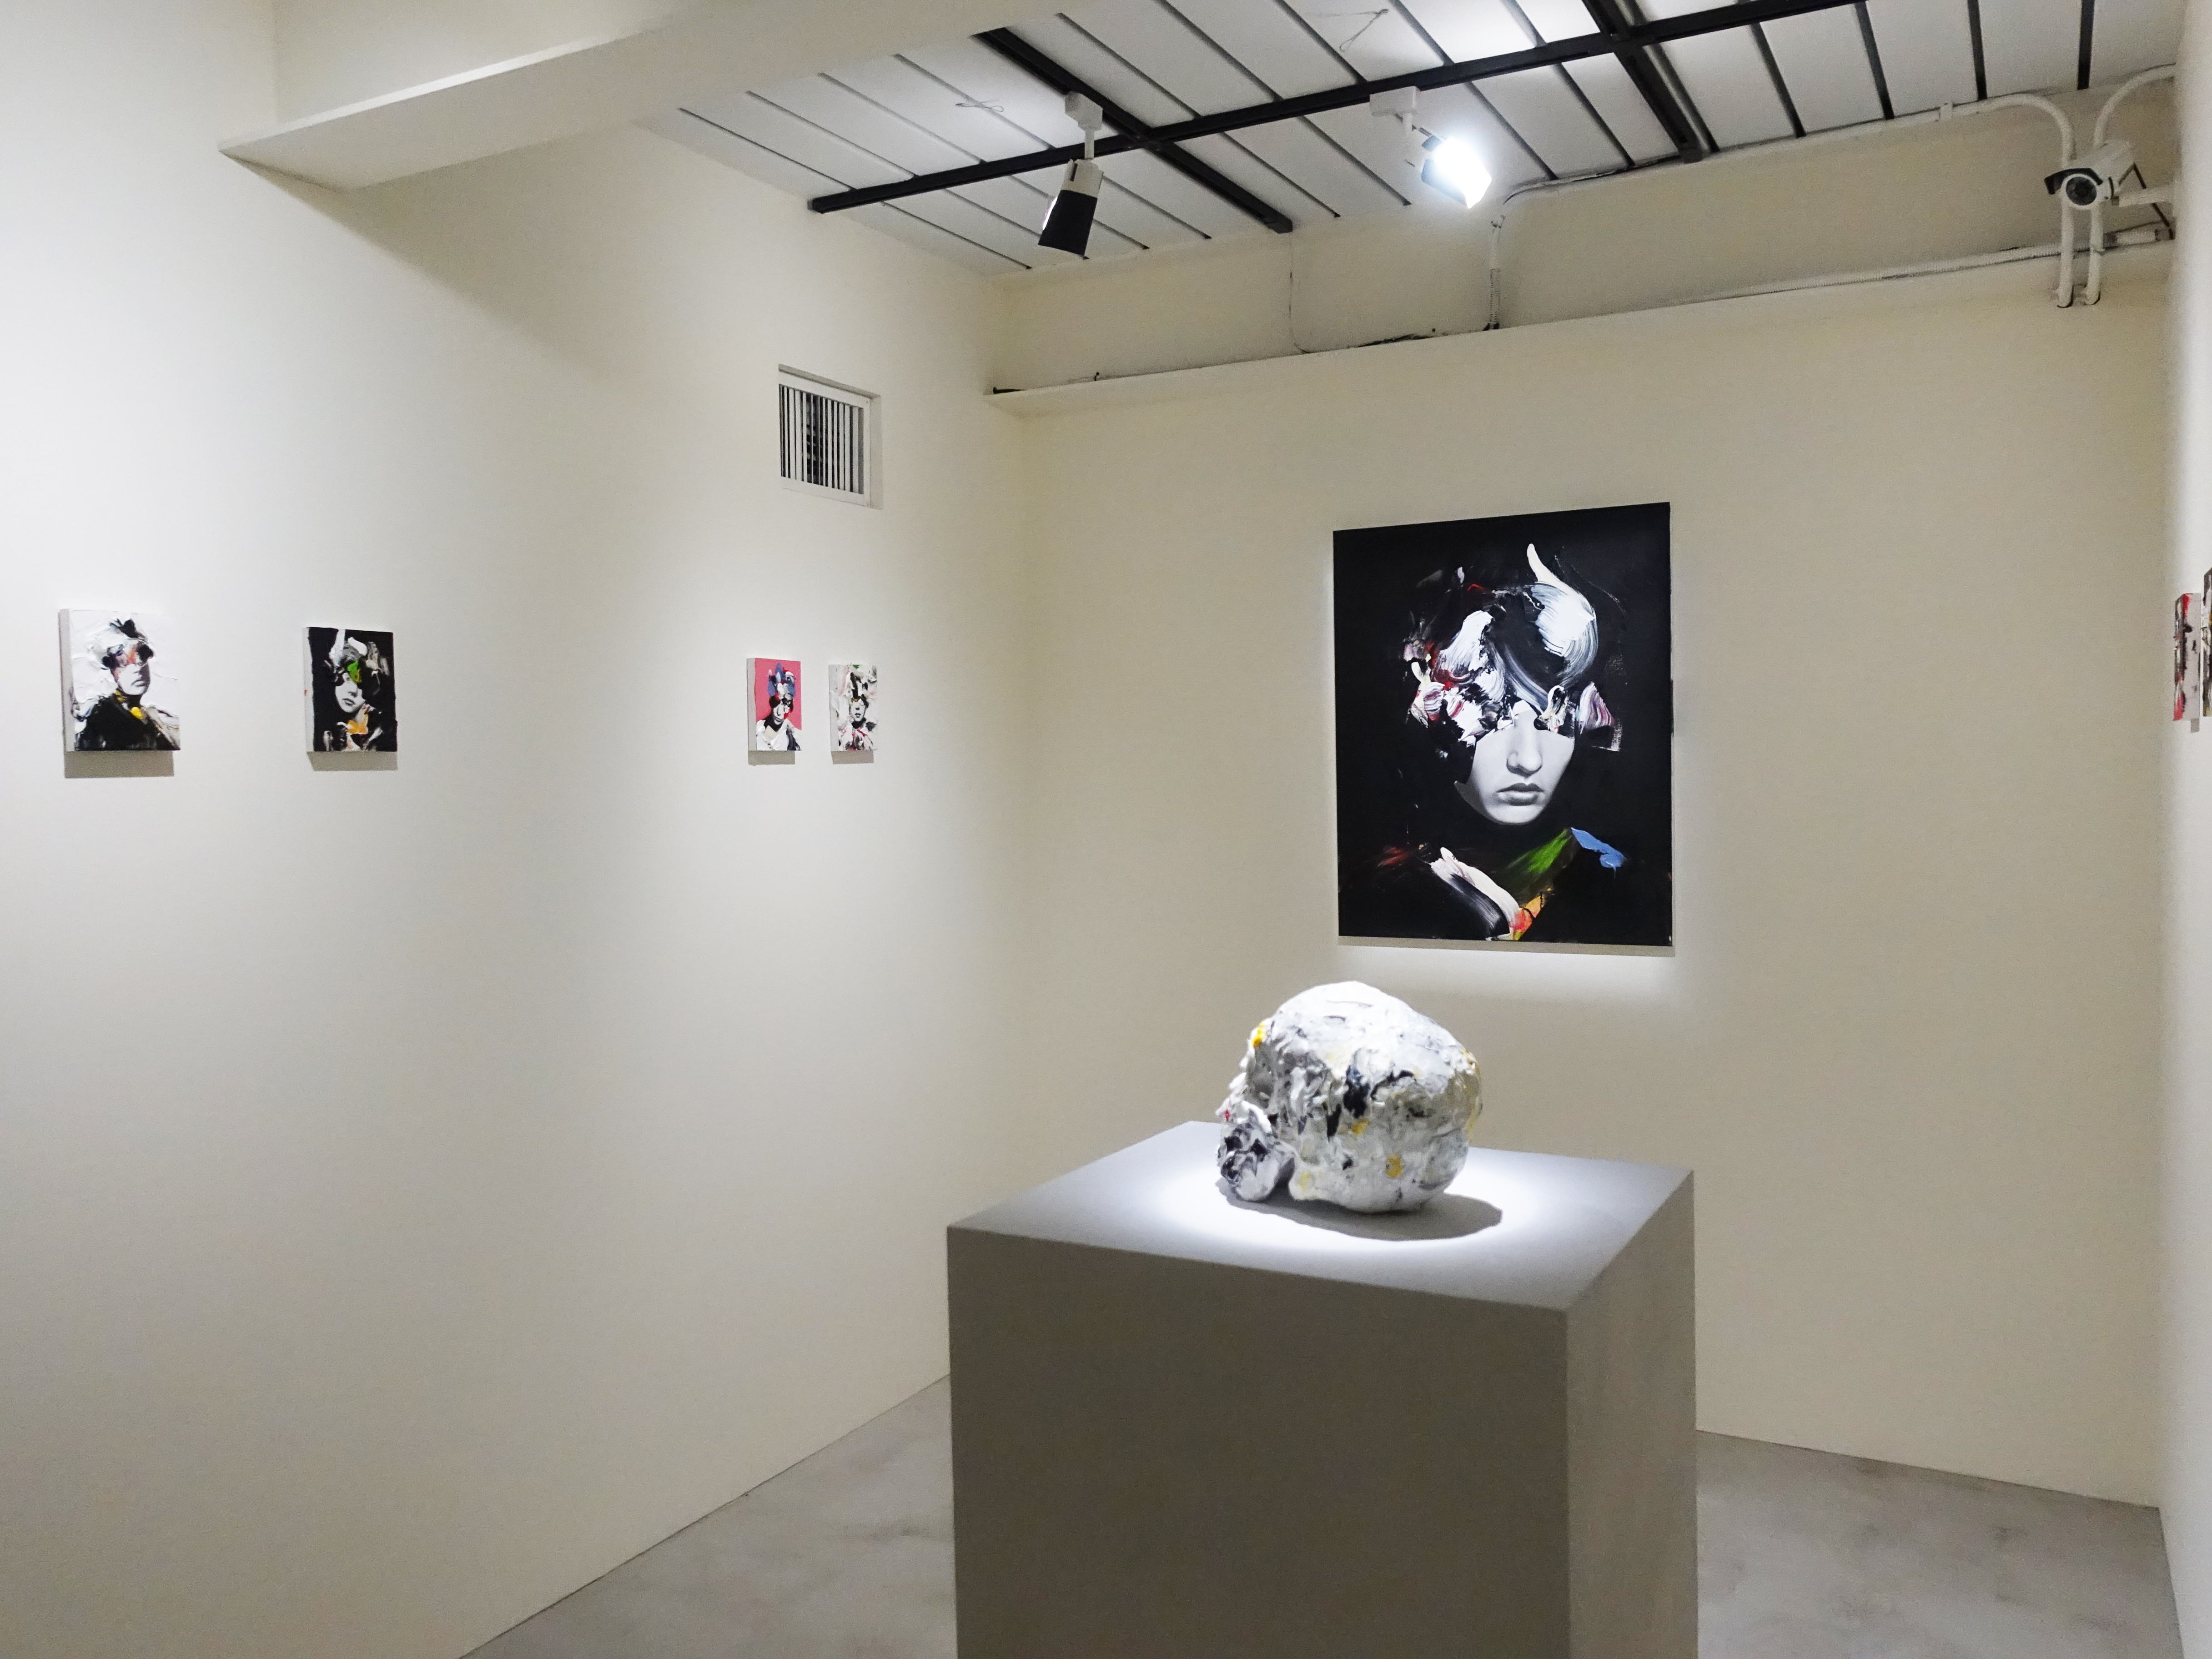 Hiro Hiro Art Space佐藤誠高創作個展《表面、真實之離散》展覽空間。